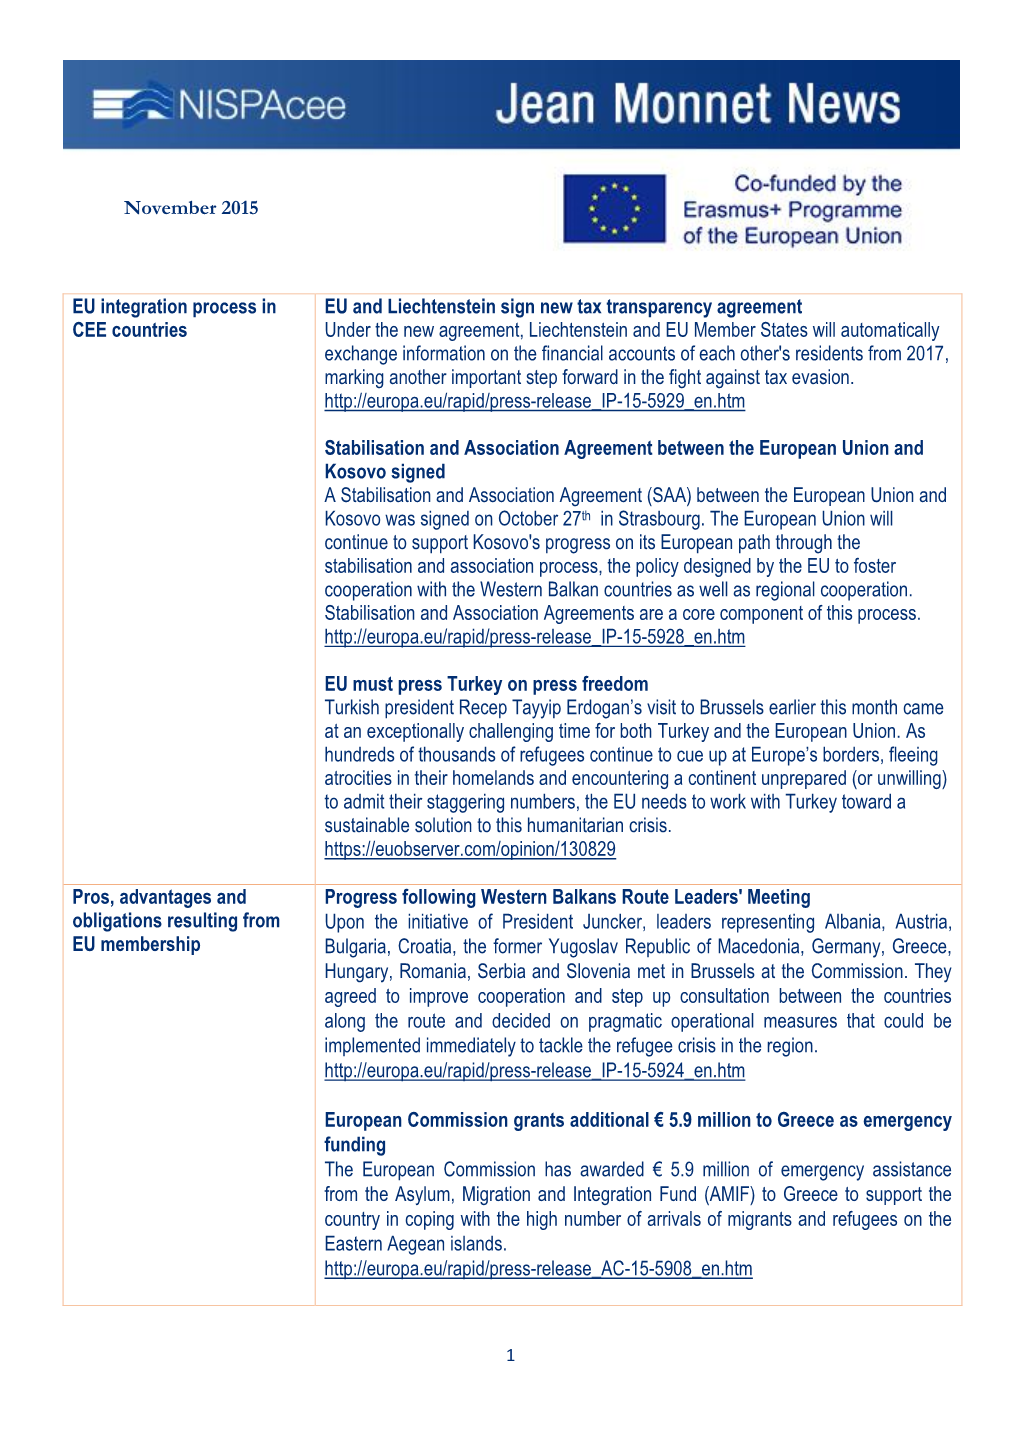 November 2015 EU Integration Process in CEE Countries EU And